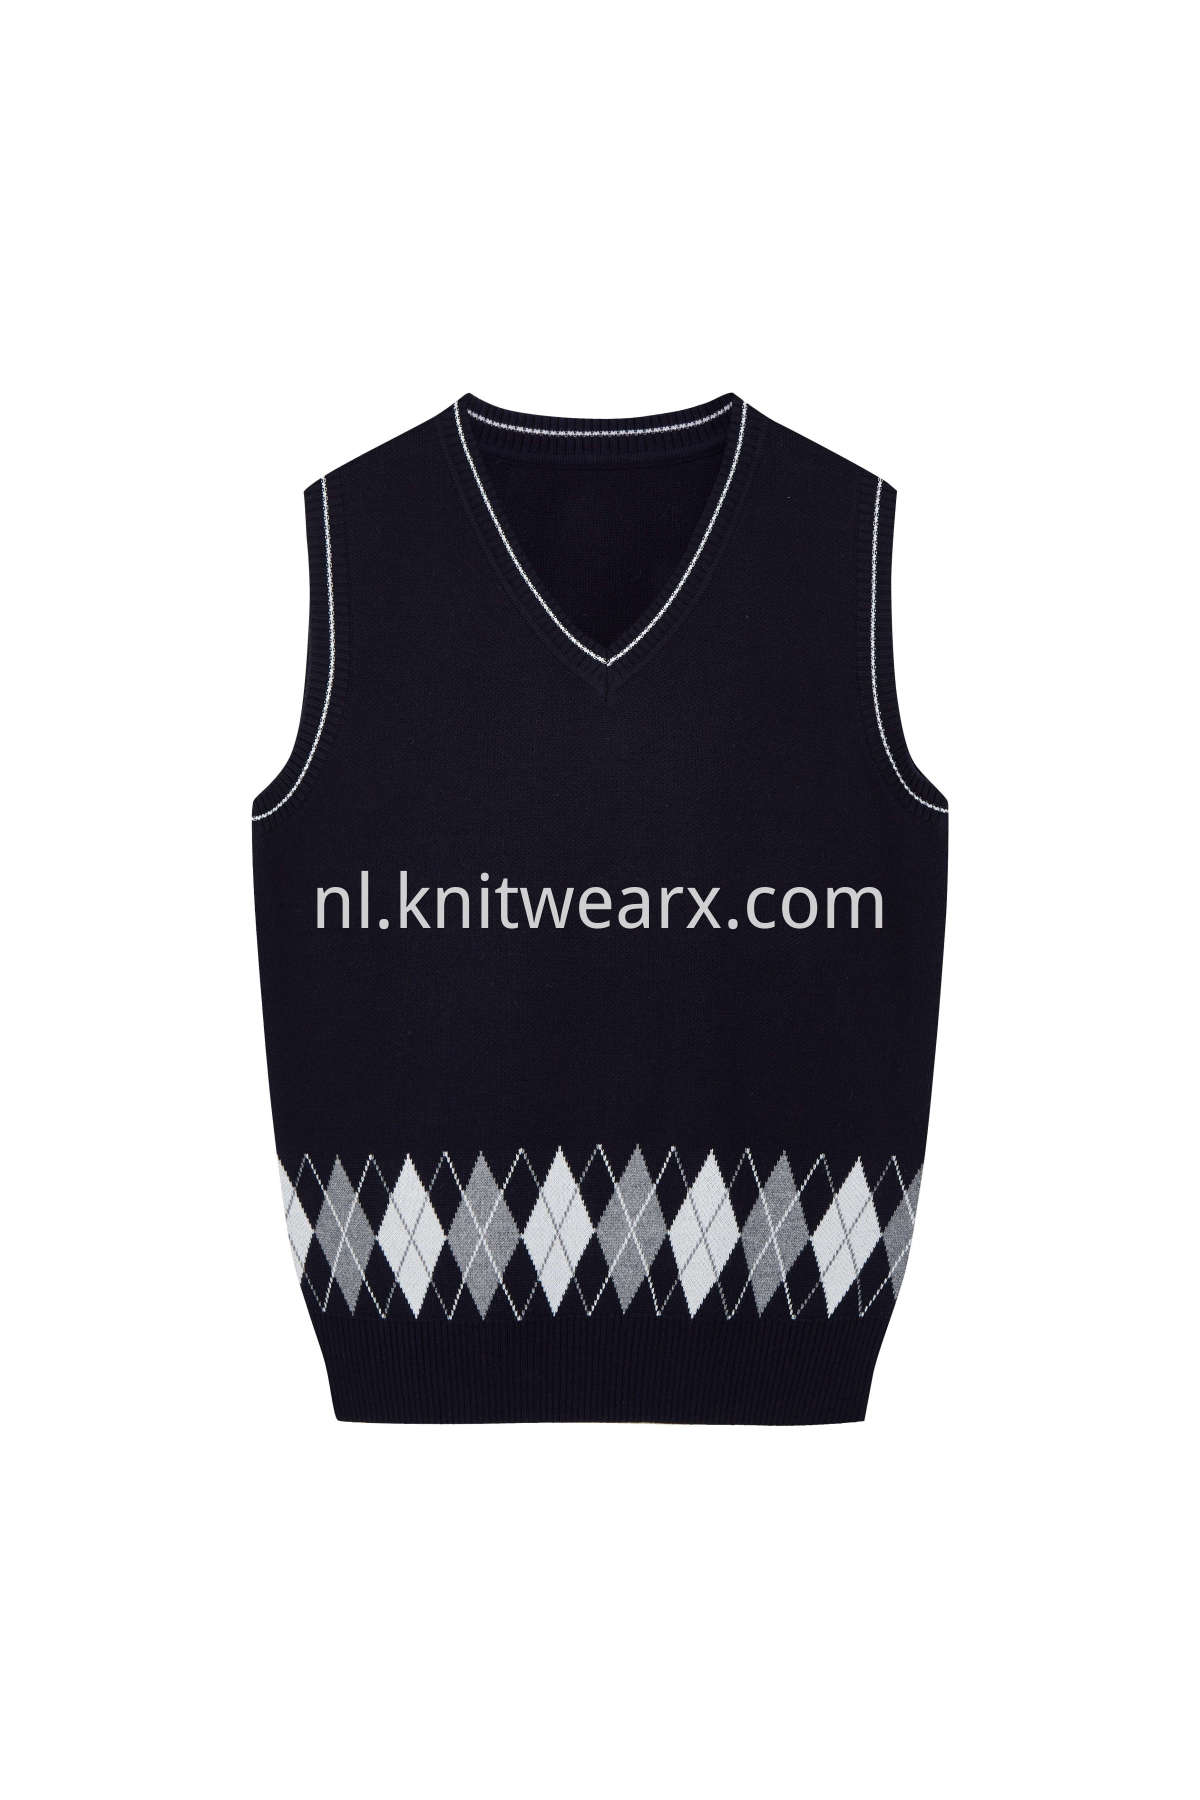 Kids's Sweater Jarquard Argyle Vest Cotton V-Neck School Uniform Pullover Top